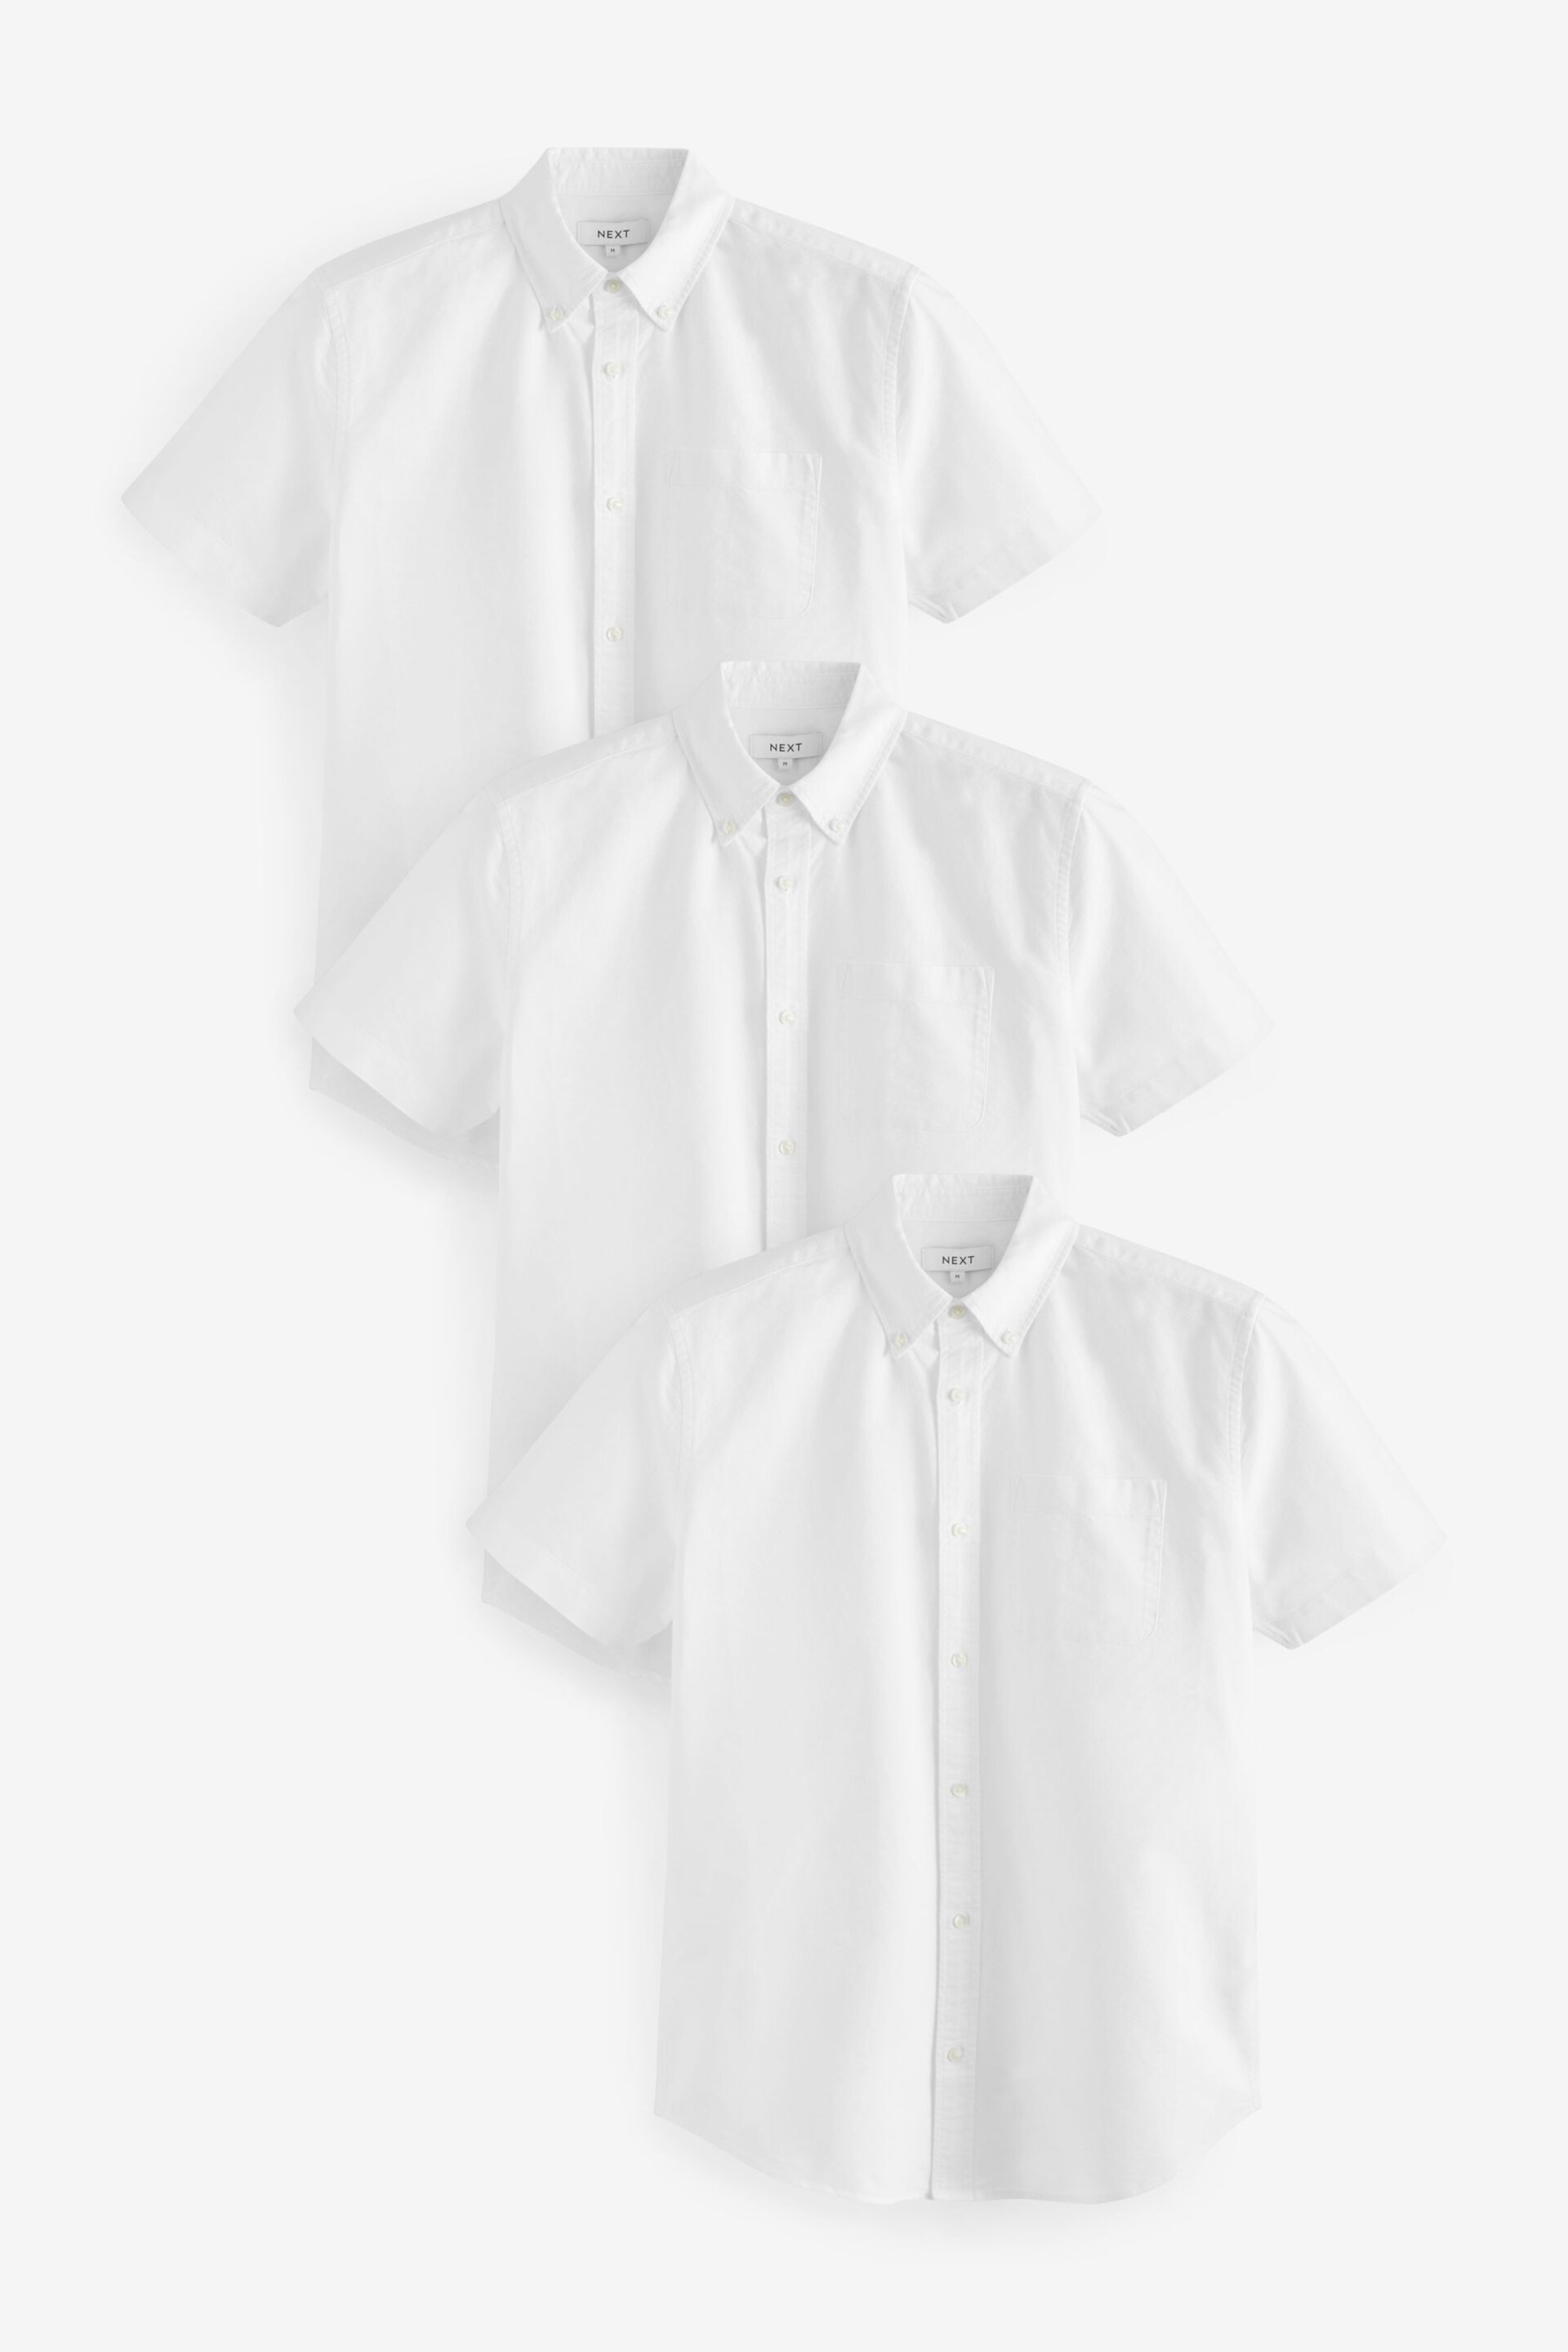 White Short Sleeve Oxford Shirt 3 Pack - Image 1 of 6